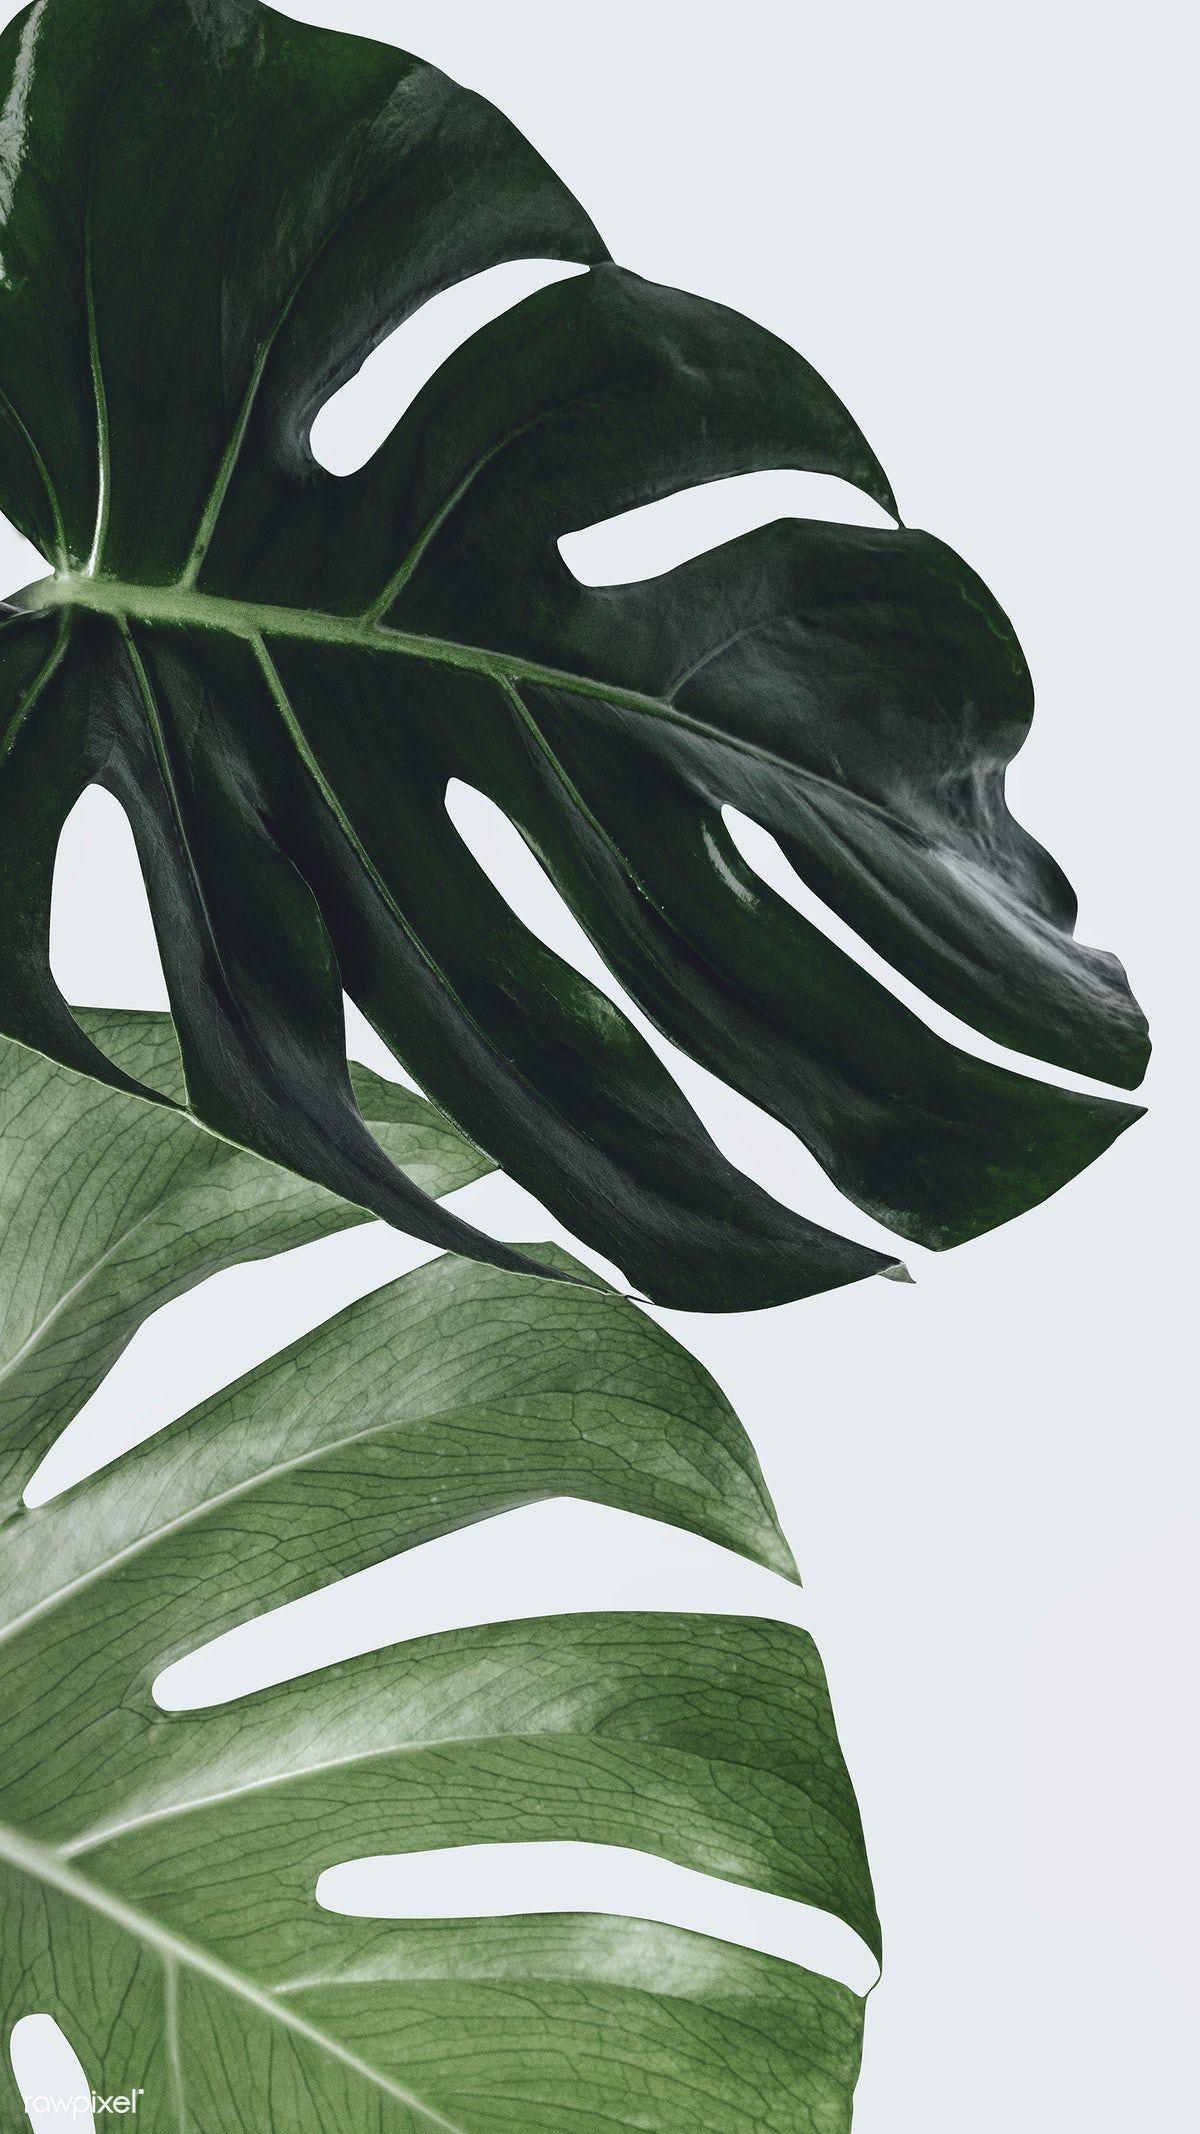 Plant Iphone Wallpaper on Behance